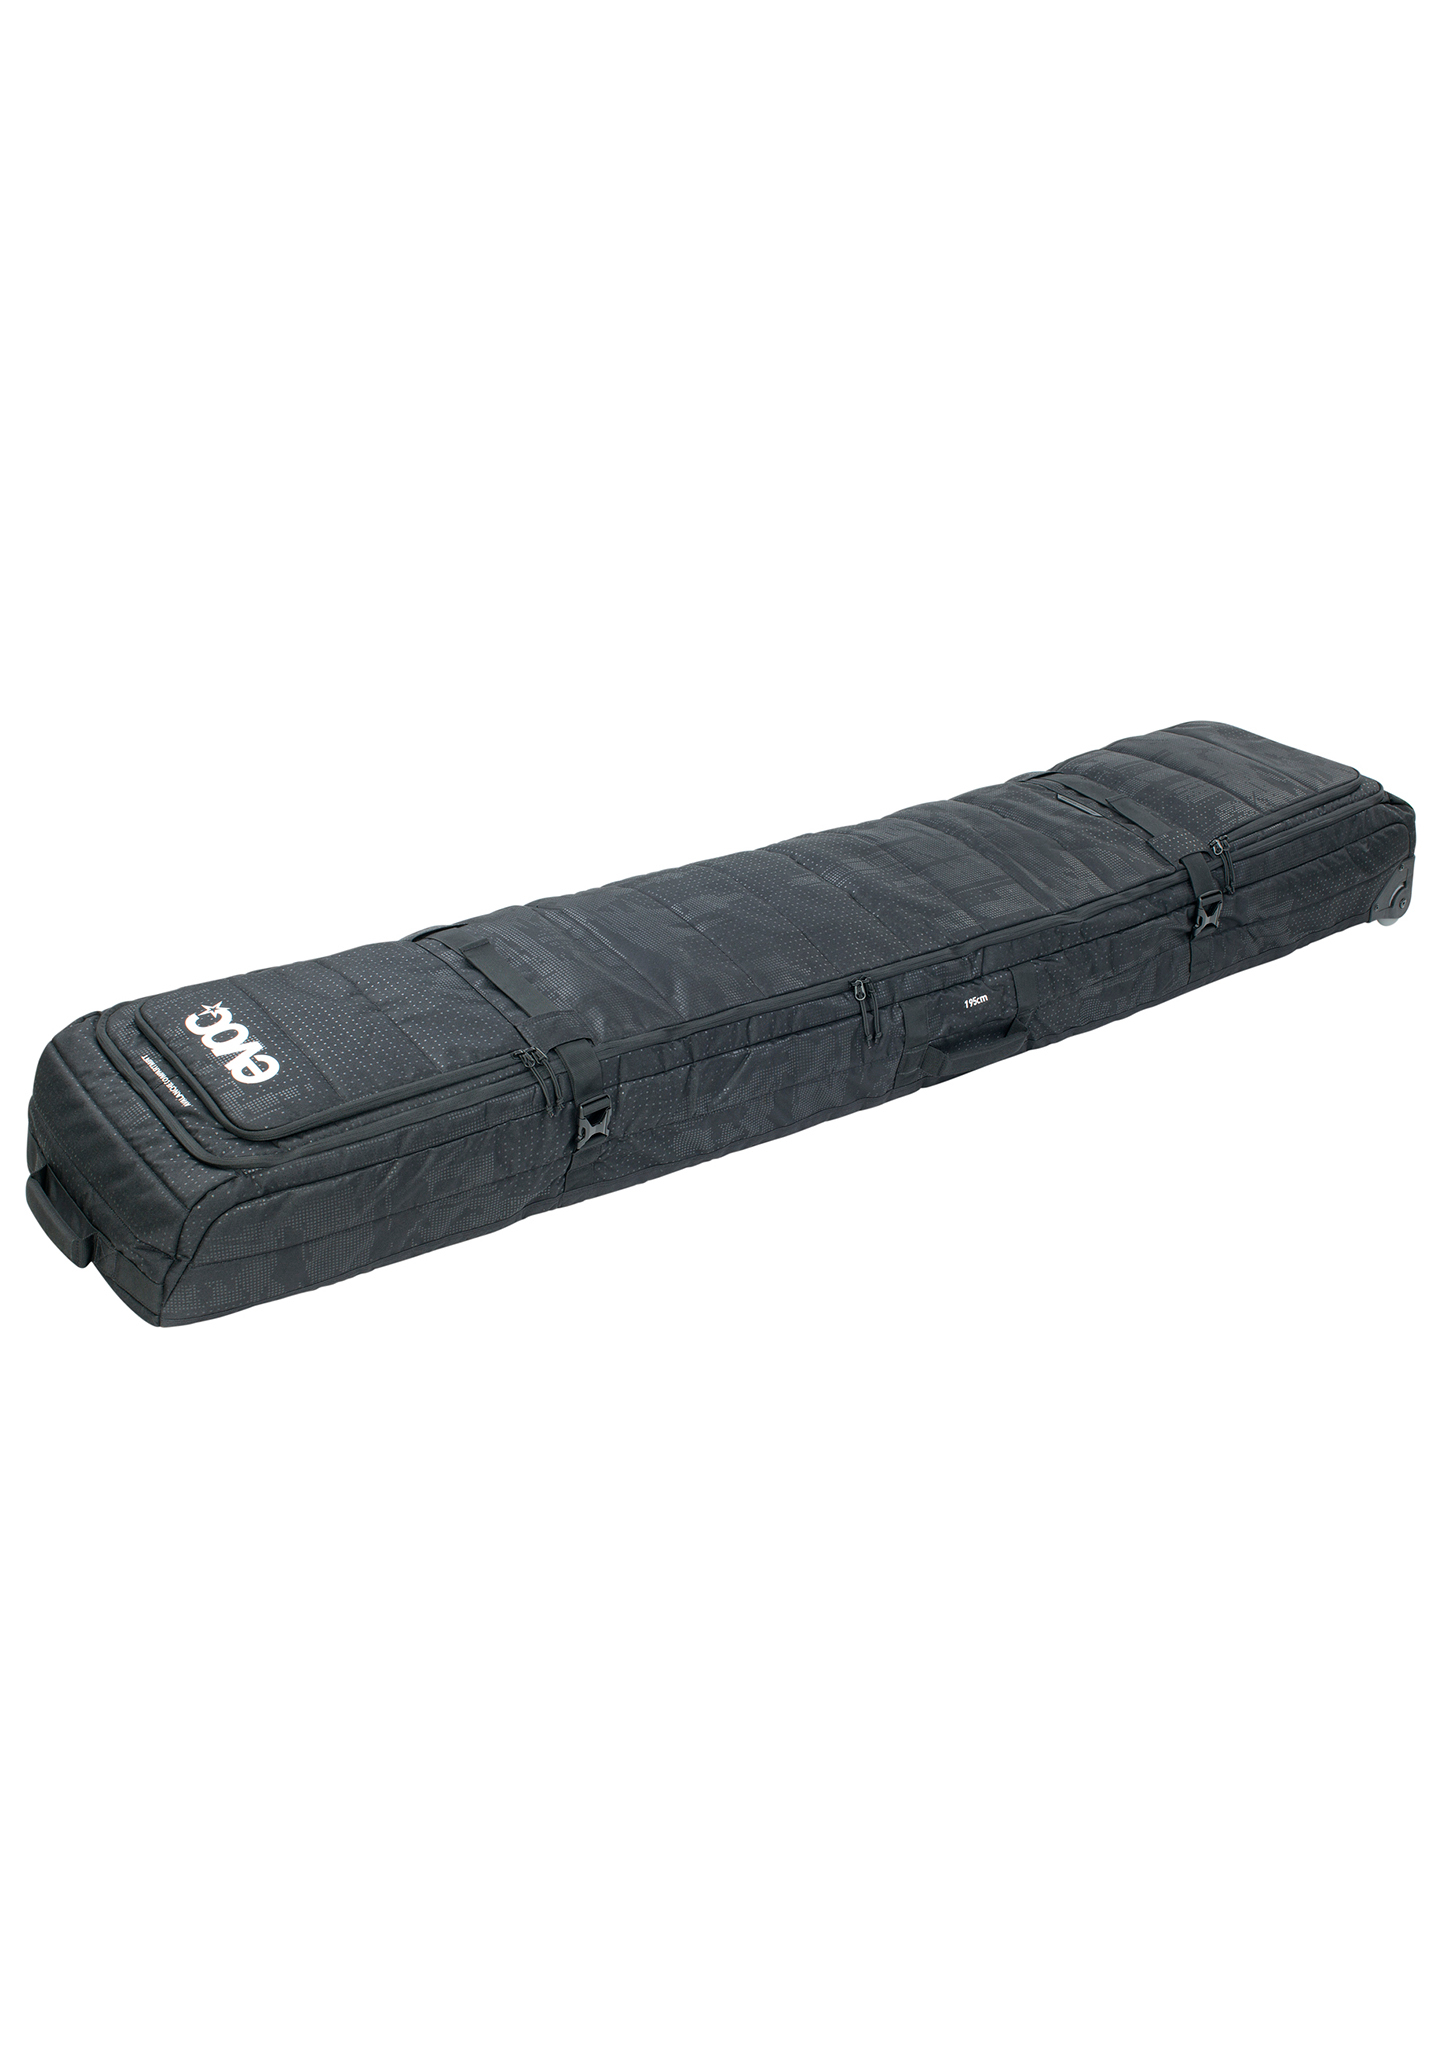 Evoc Snow Gear Roller 160 cm Snowboard Boardbag black M